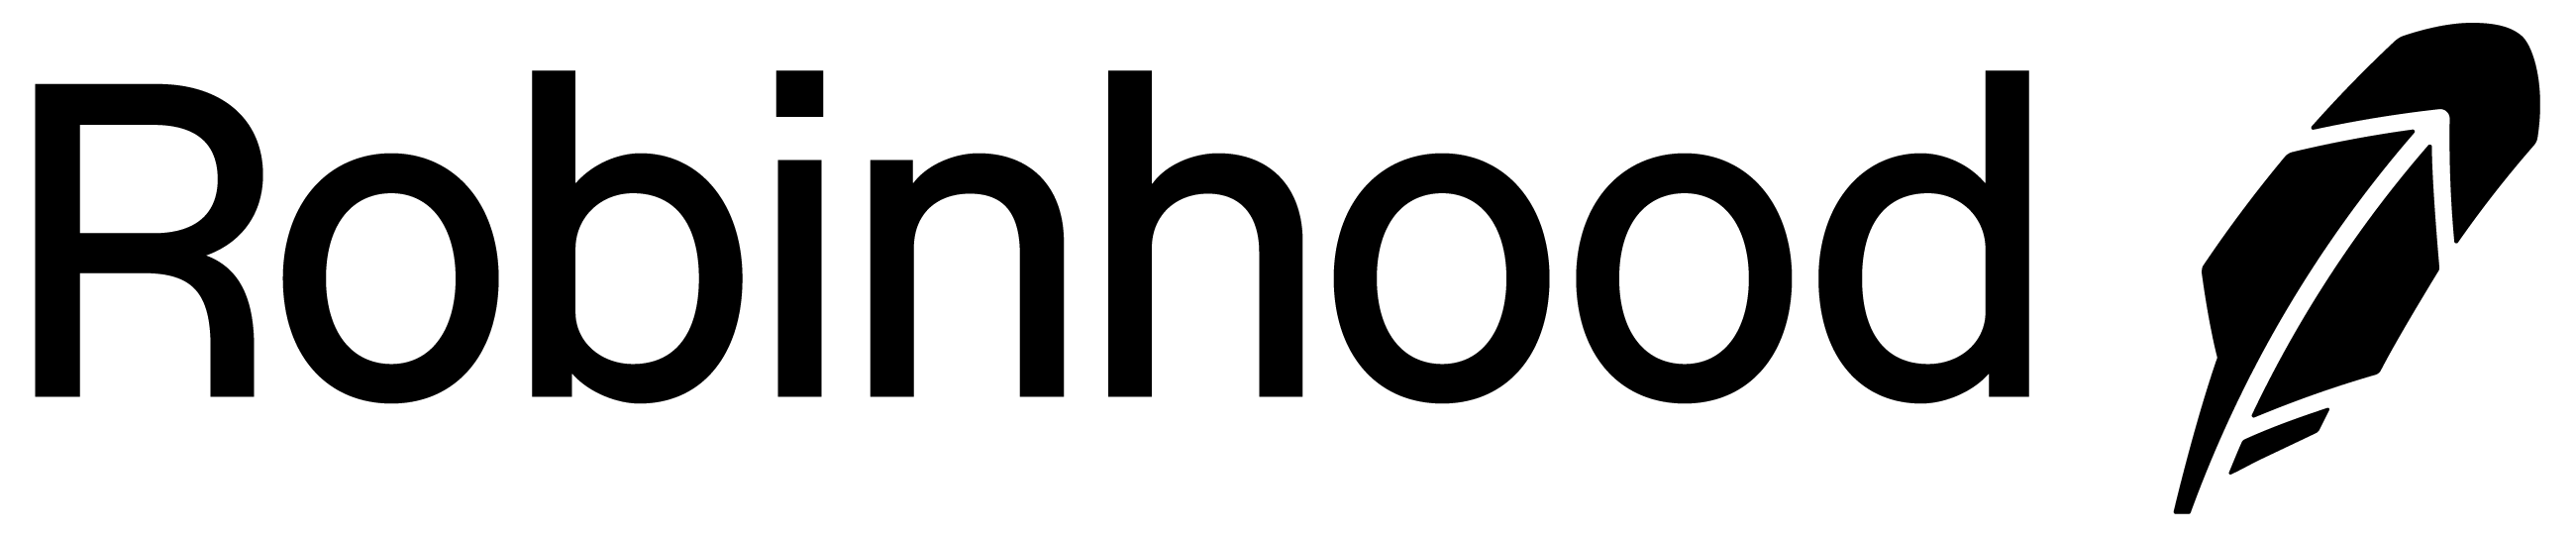 Robinhood logo colors